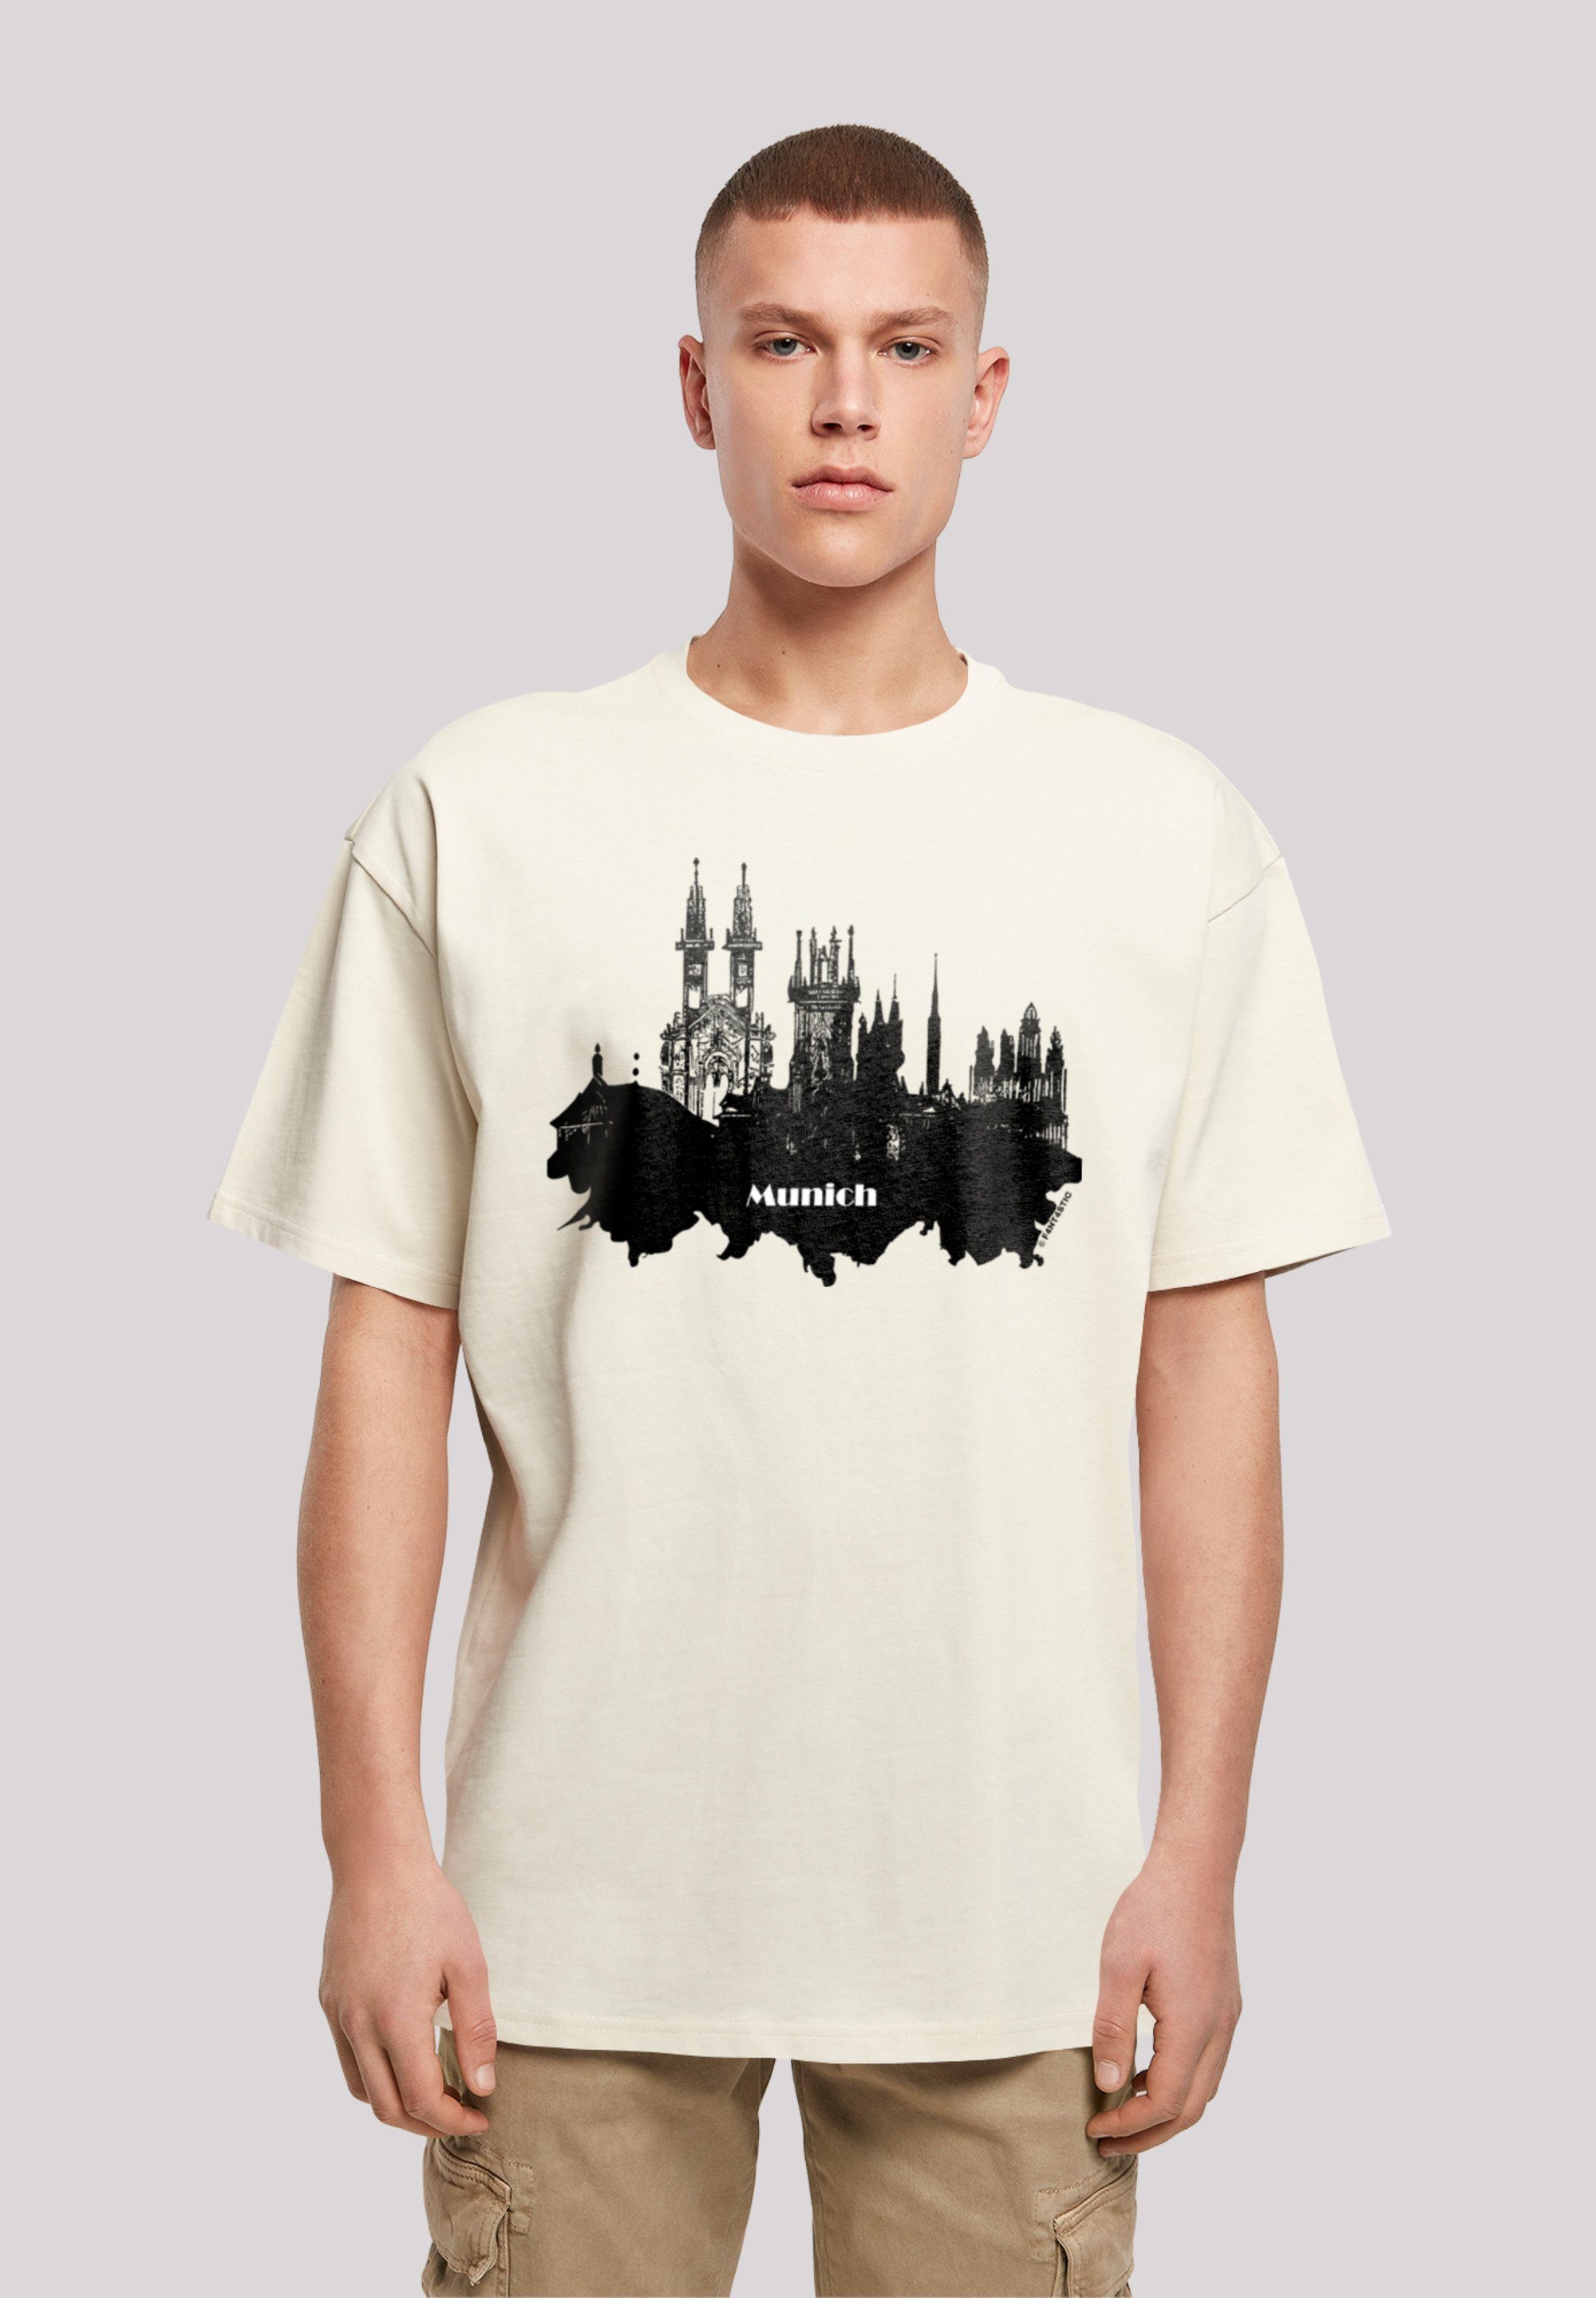 F4NT4STIC T-Shirt Cities Collection - Munich skyline Print sand